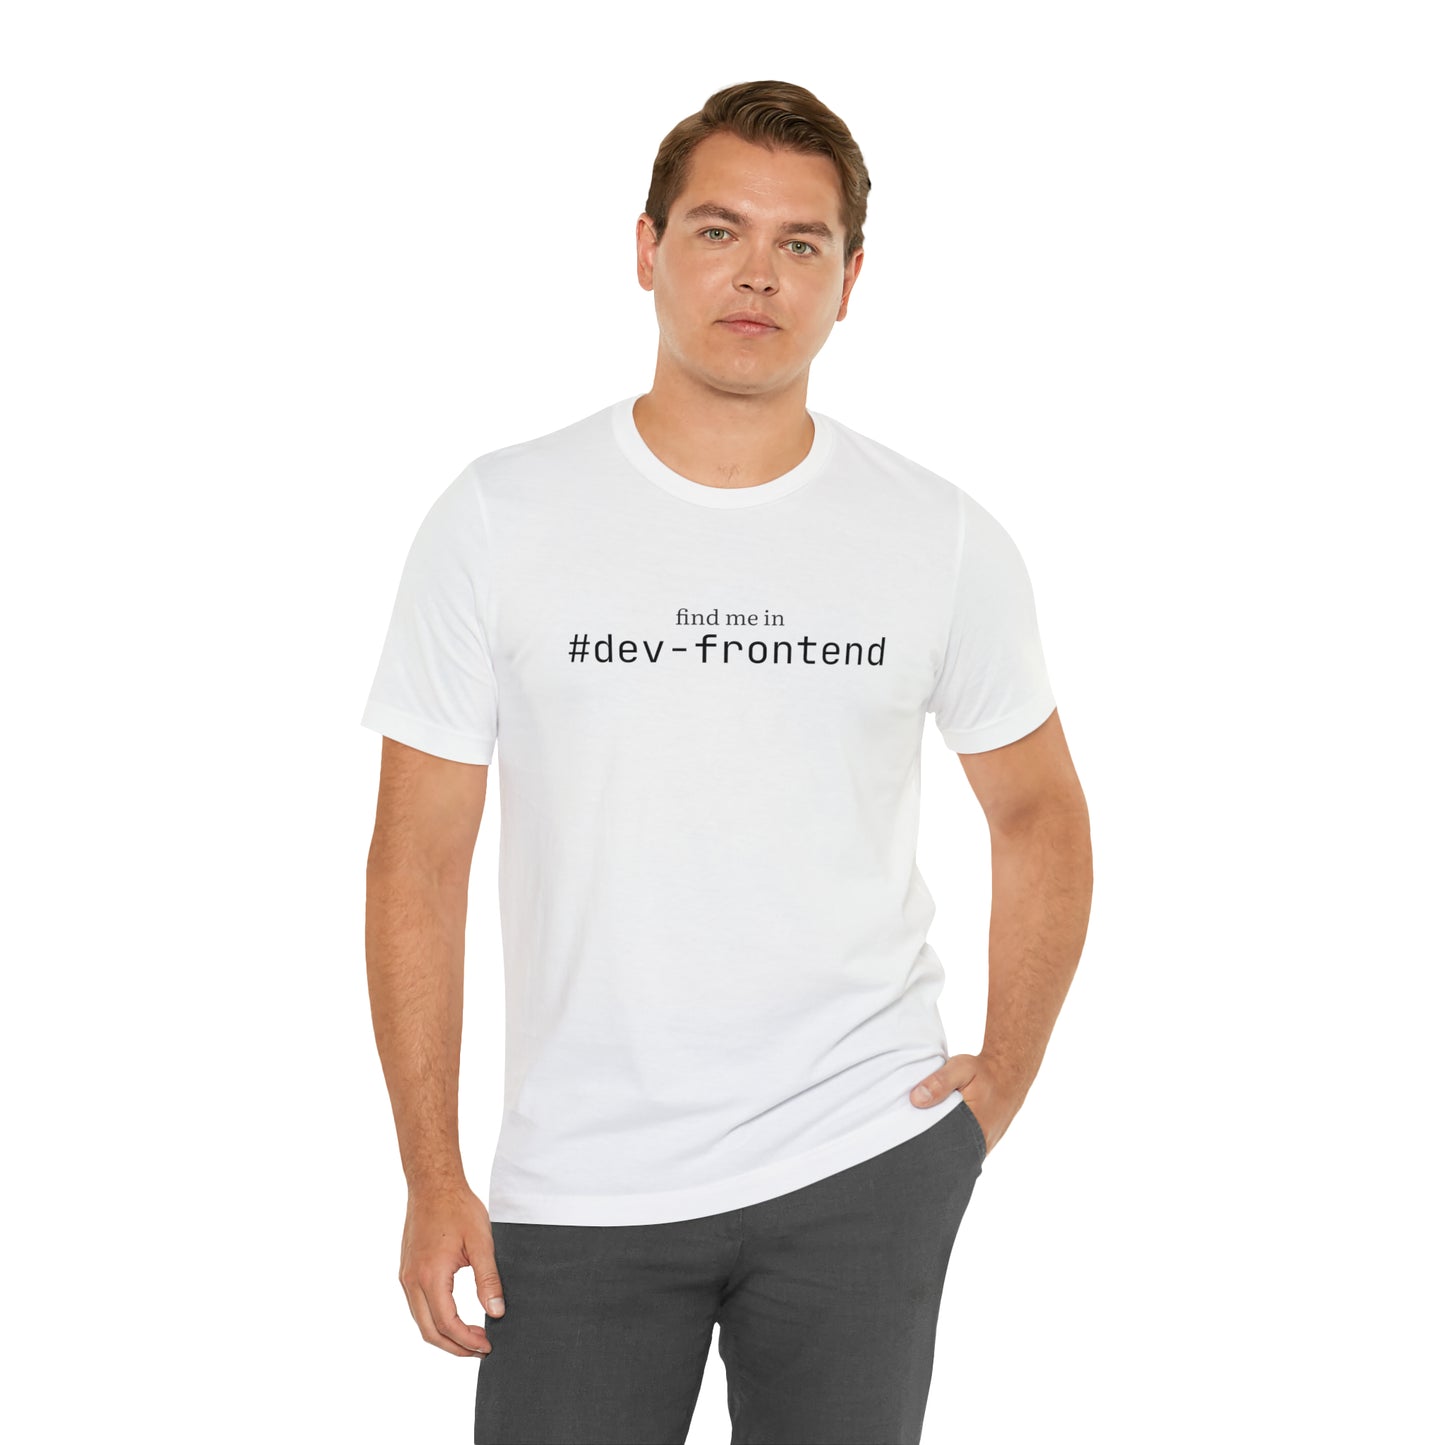 Find me in #dev-frontend T-Shirt